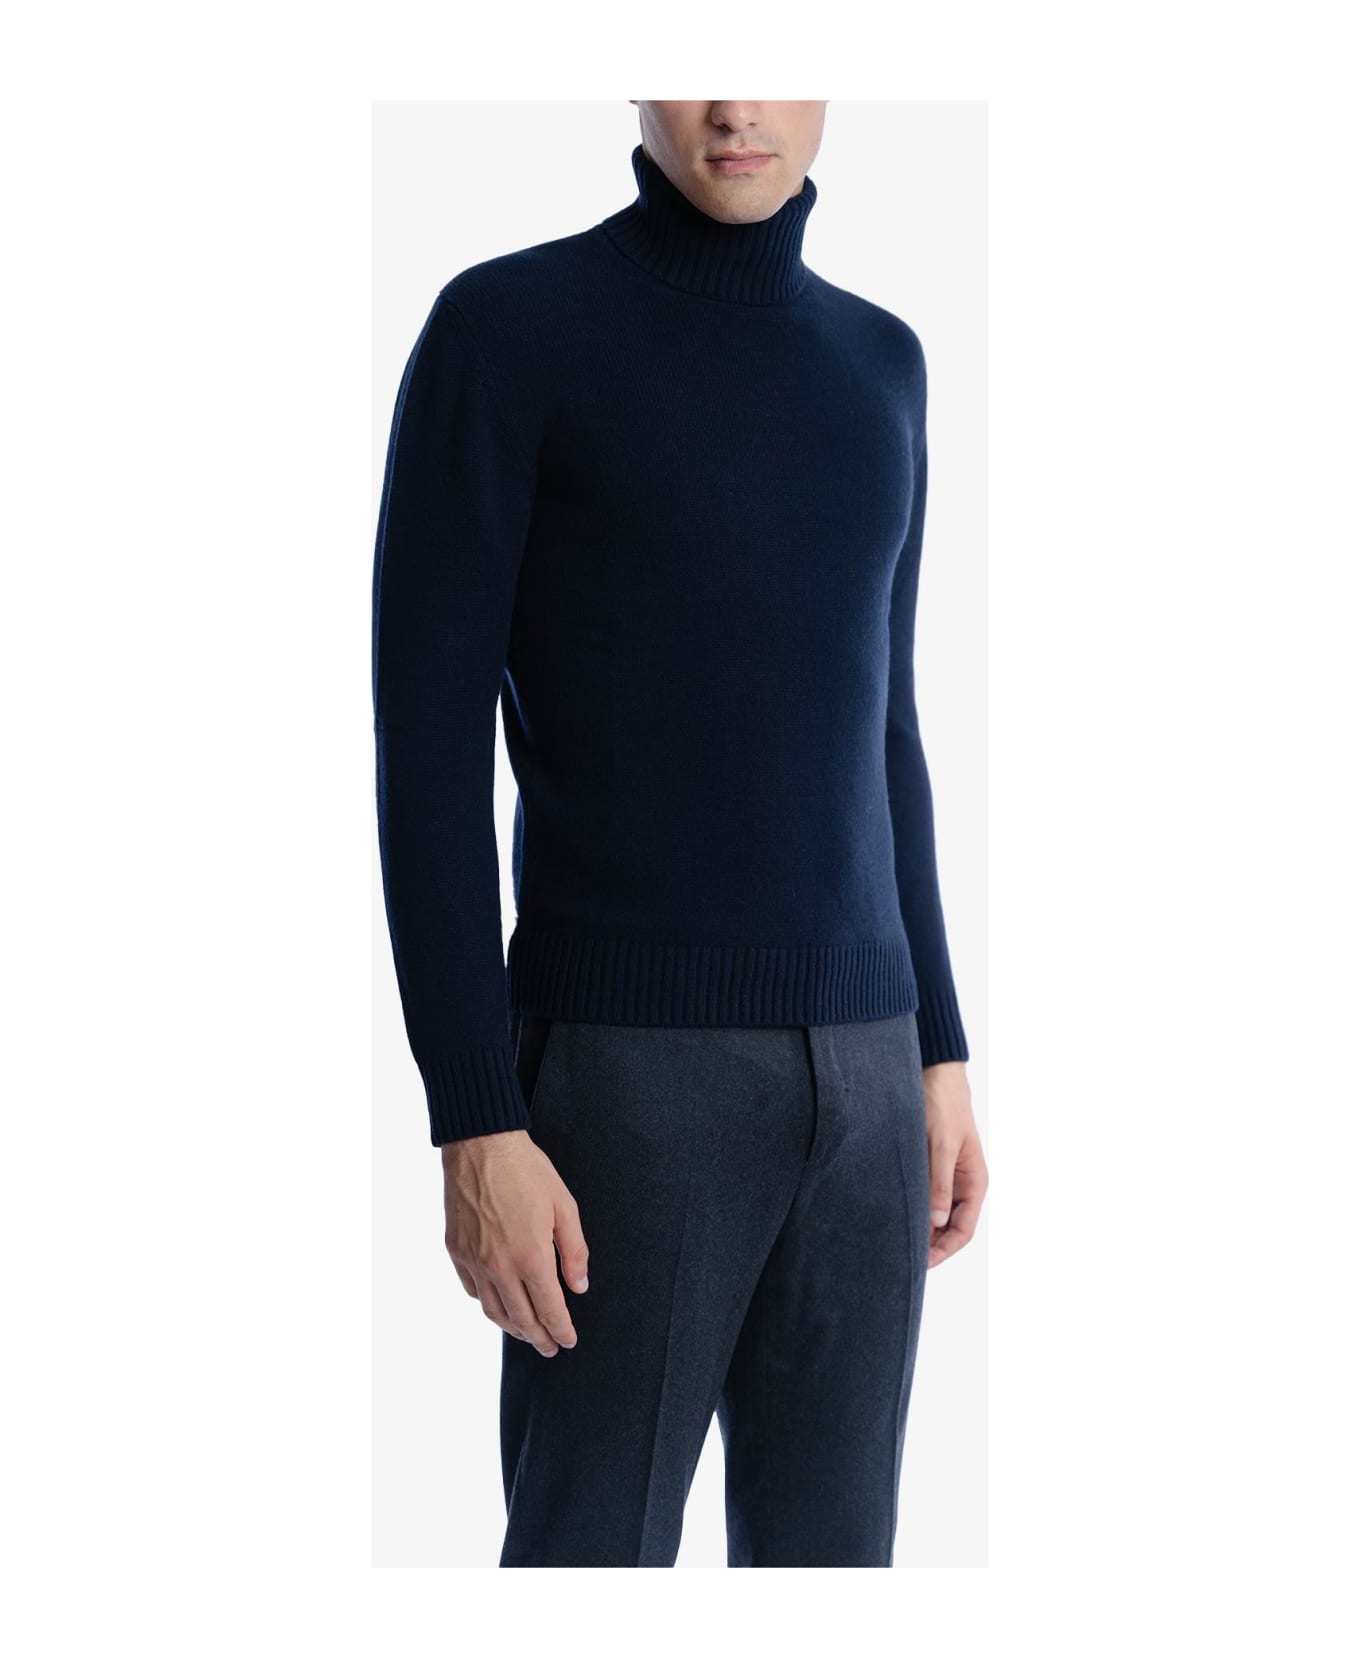 Larusmiani Turtleneck Sweater 'diablerets' Sweater - MidnightBlue